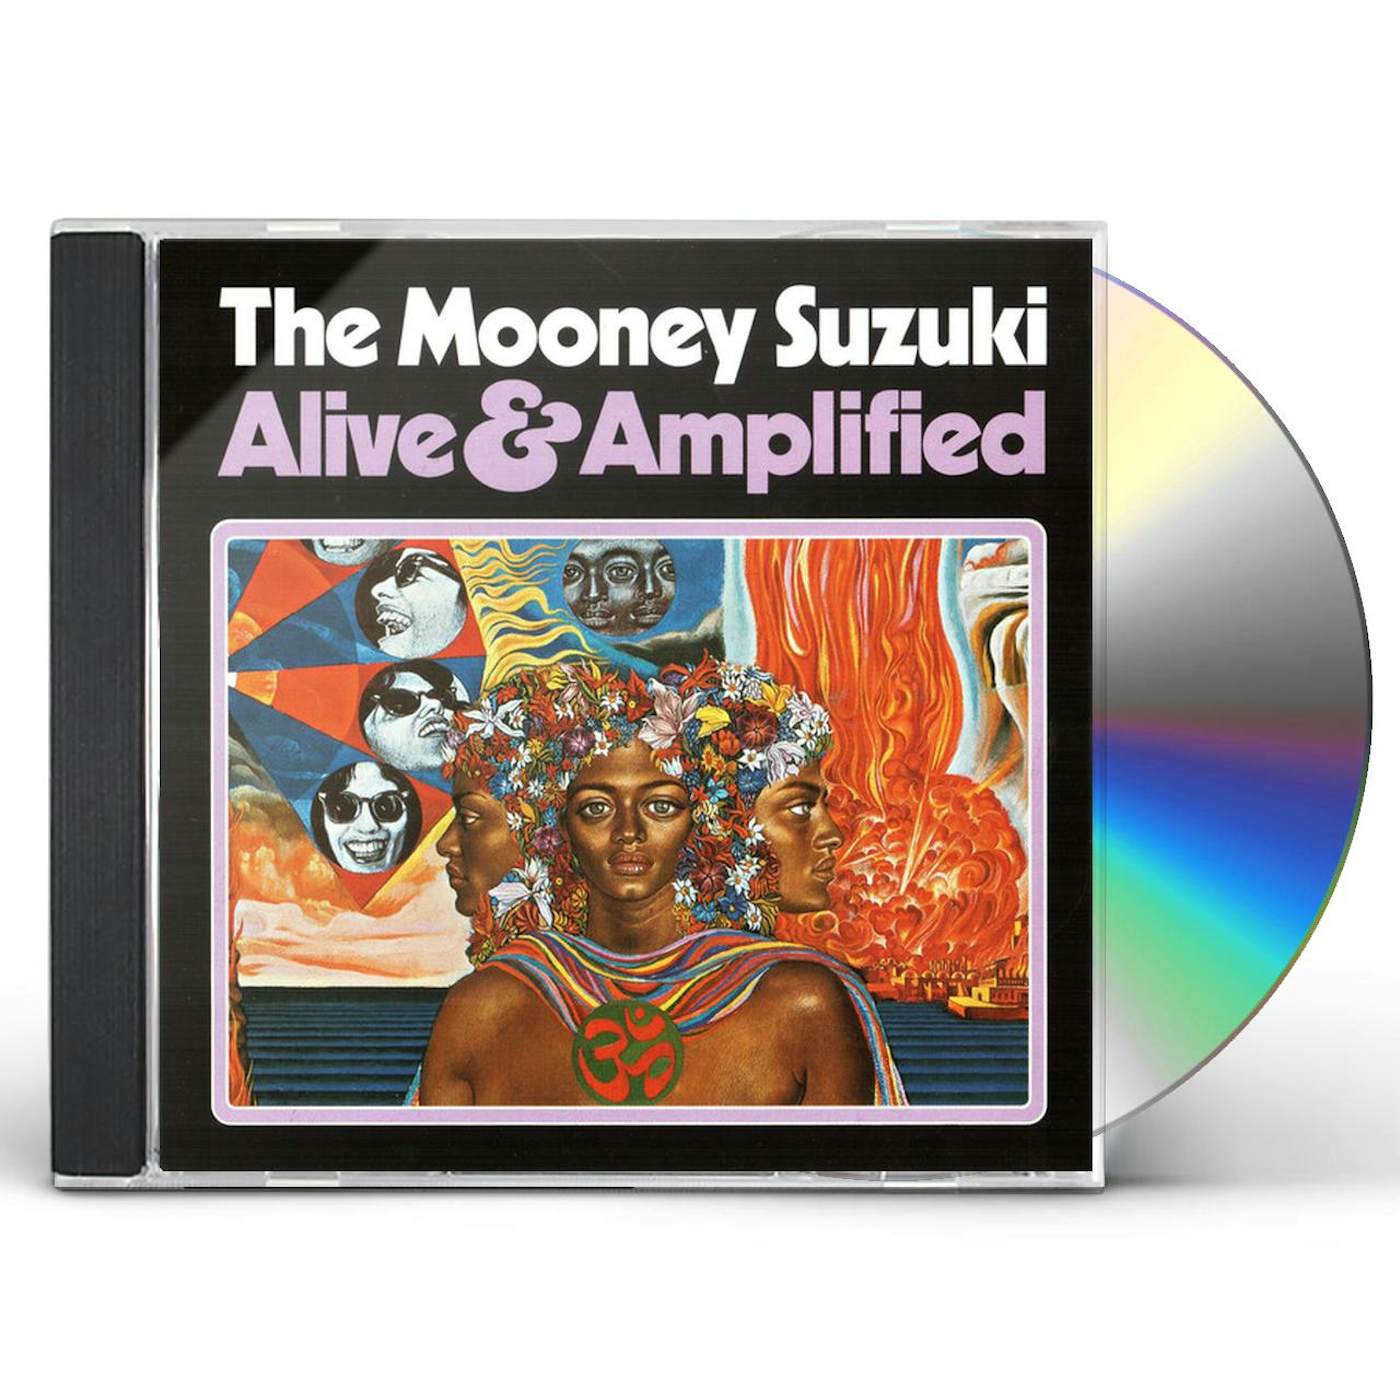 The Mooney Suzuki ALIVE & AMPLIFIED CD